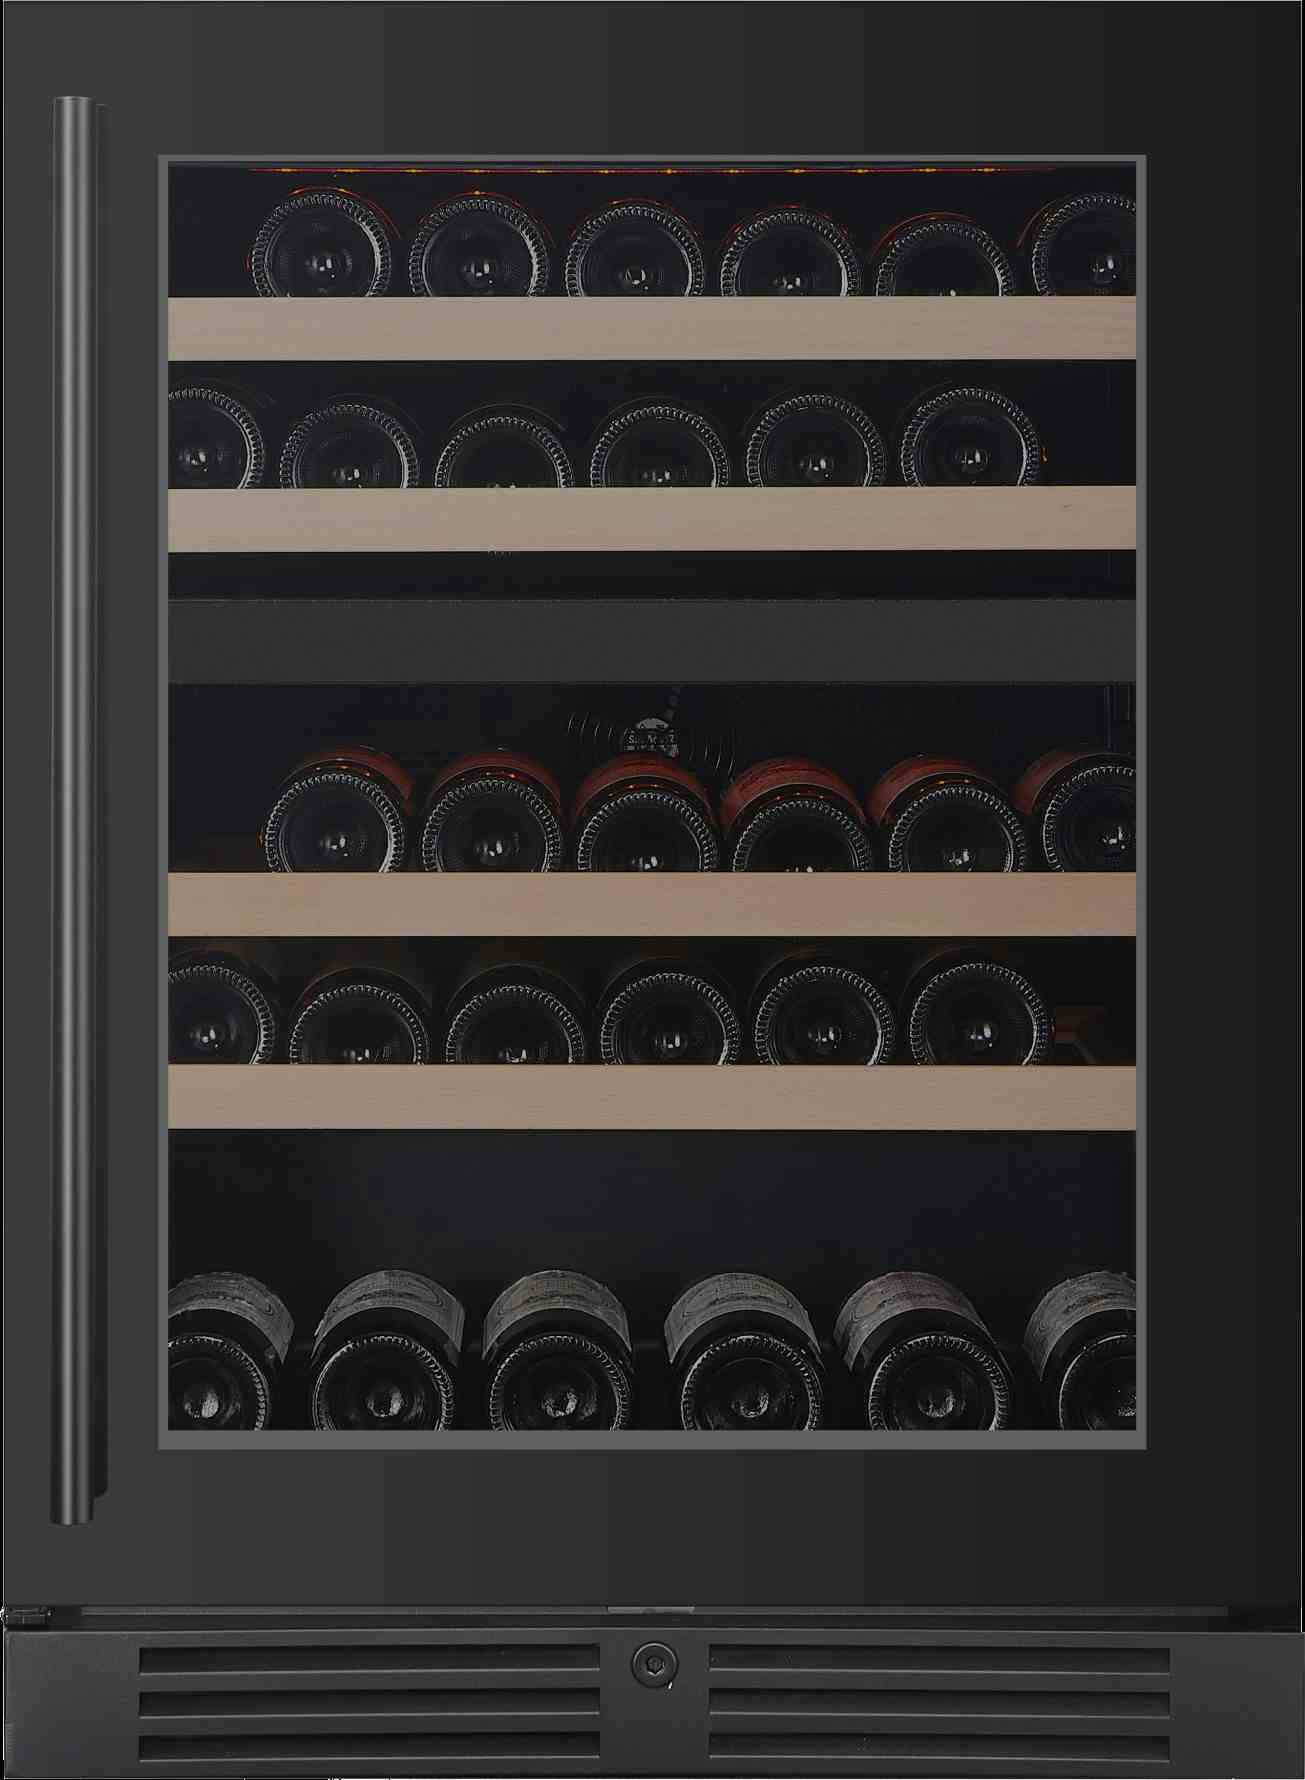 Vigneron Kitchen Collection 60 DB, Black edition